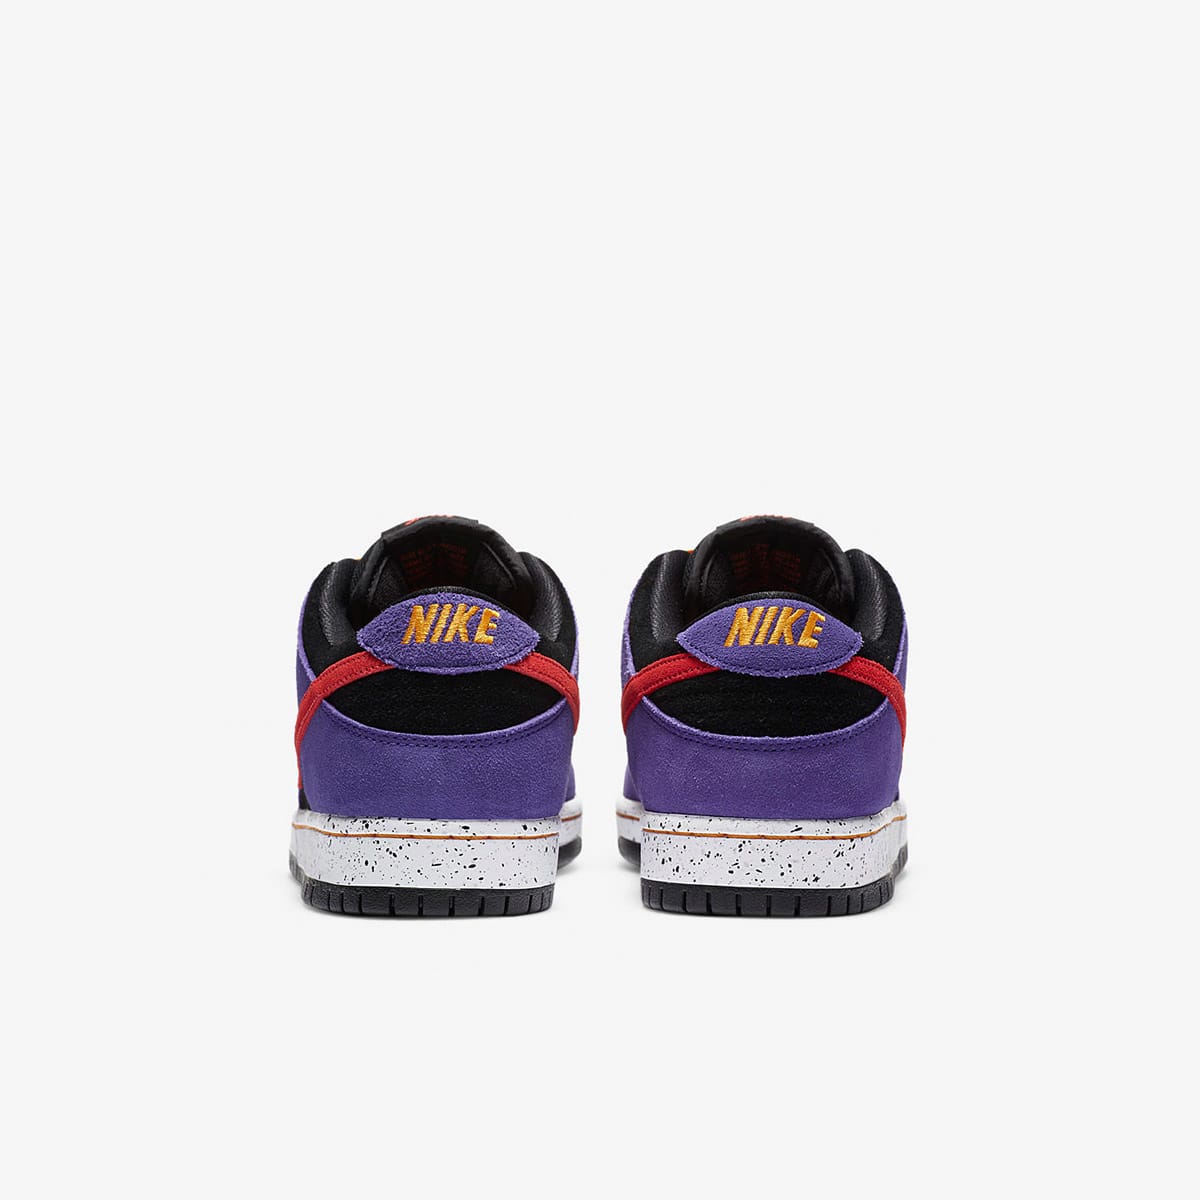 Nike SB Dunk Low Pro (Black, Sunburst & Purple) | END. Launches